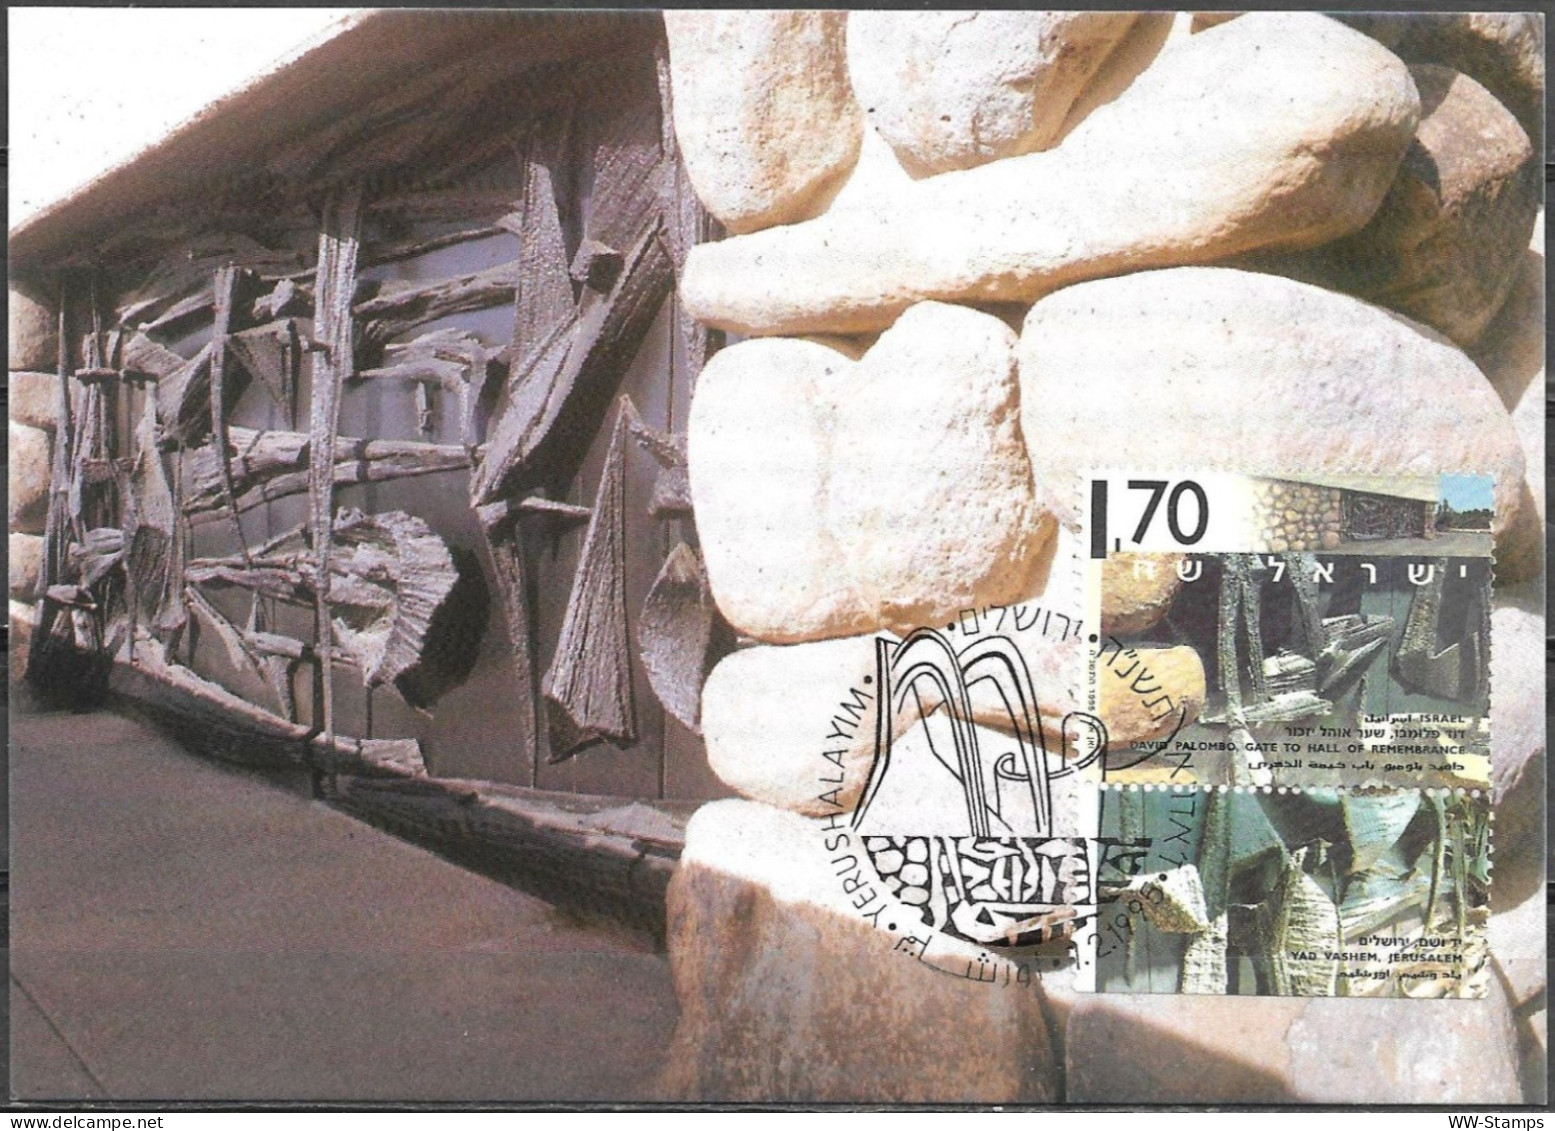 Israel 1995 Maximum Card Gate Of Yad Vashem Jerusalem David Palombo Art [ILT1645] - Briefe U. Dokumente